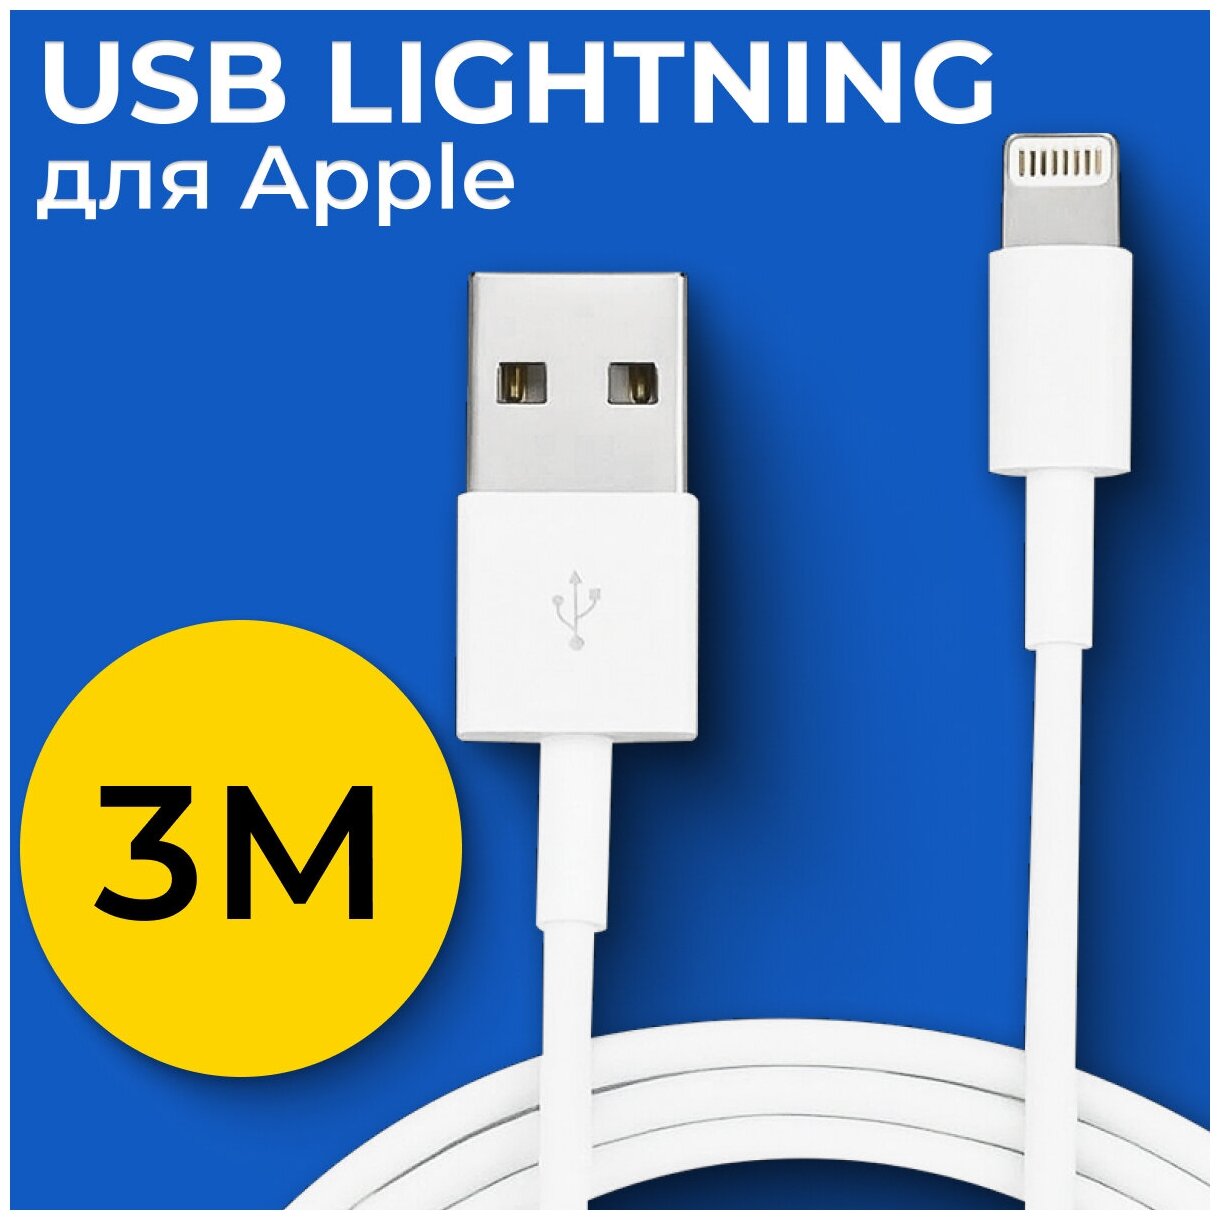 Кабель USB Lightning (3 метра) для Apple iPhone iPod iPad AirPods / Провод для зарядки Эпл Айфон Айпод Айпад Аирподс / ЮСБ Лайтнинг / Белый